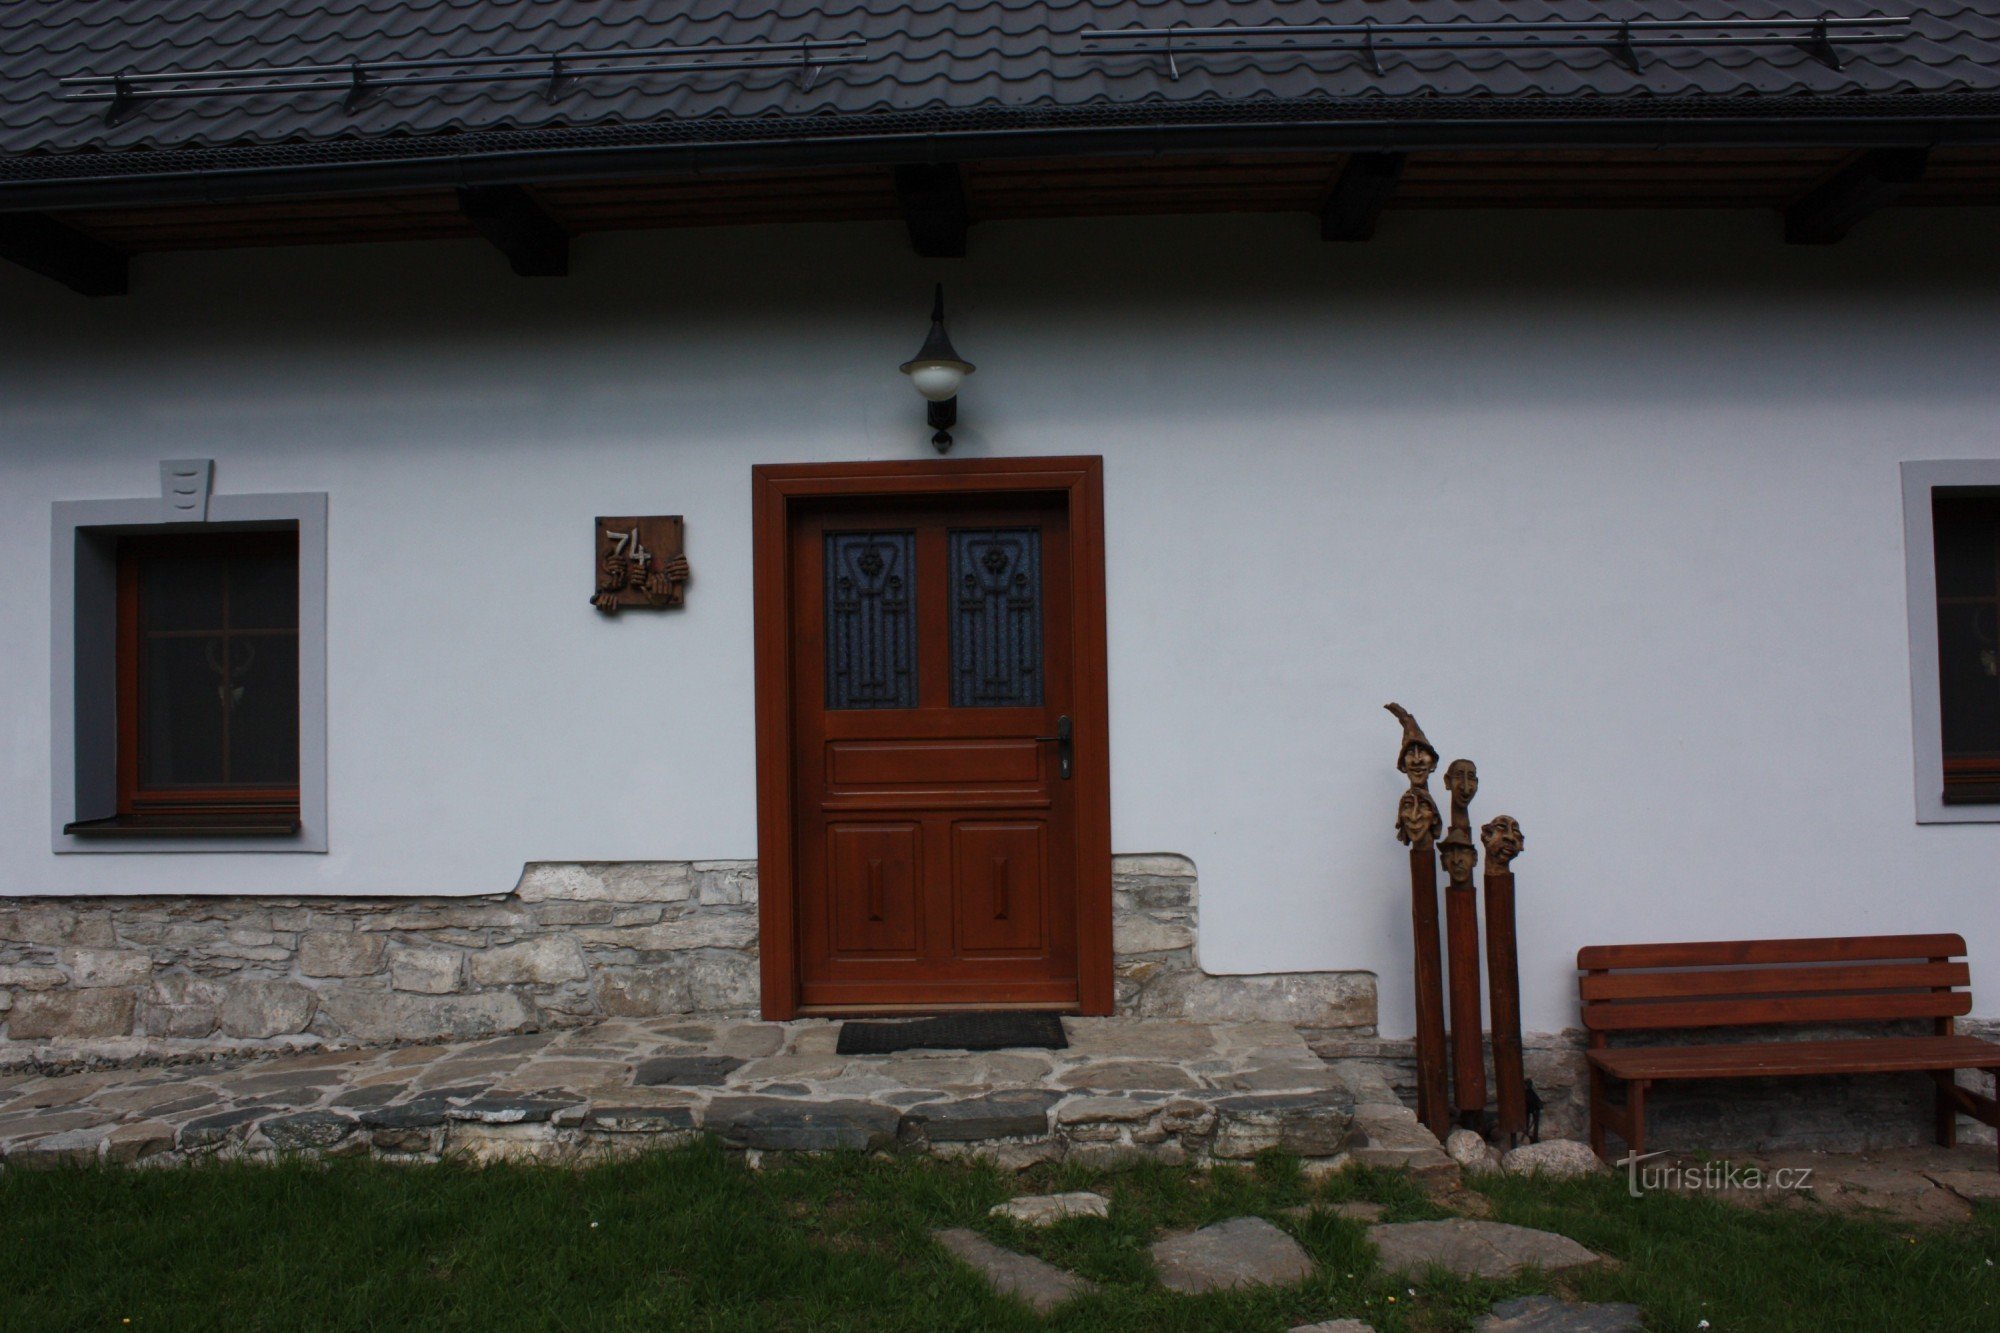 Cottage Pod Sviní horou nel villaggio di Vláská, ai piedi del massiccio del Kralické Sněžník